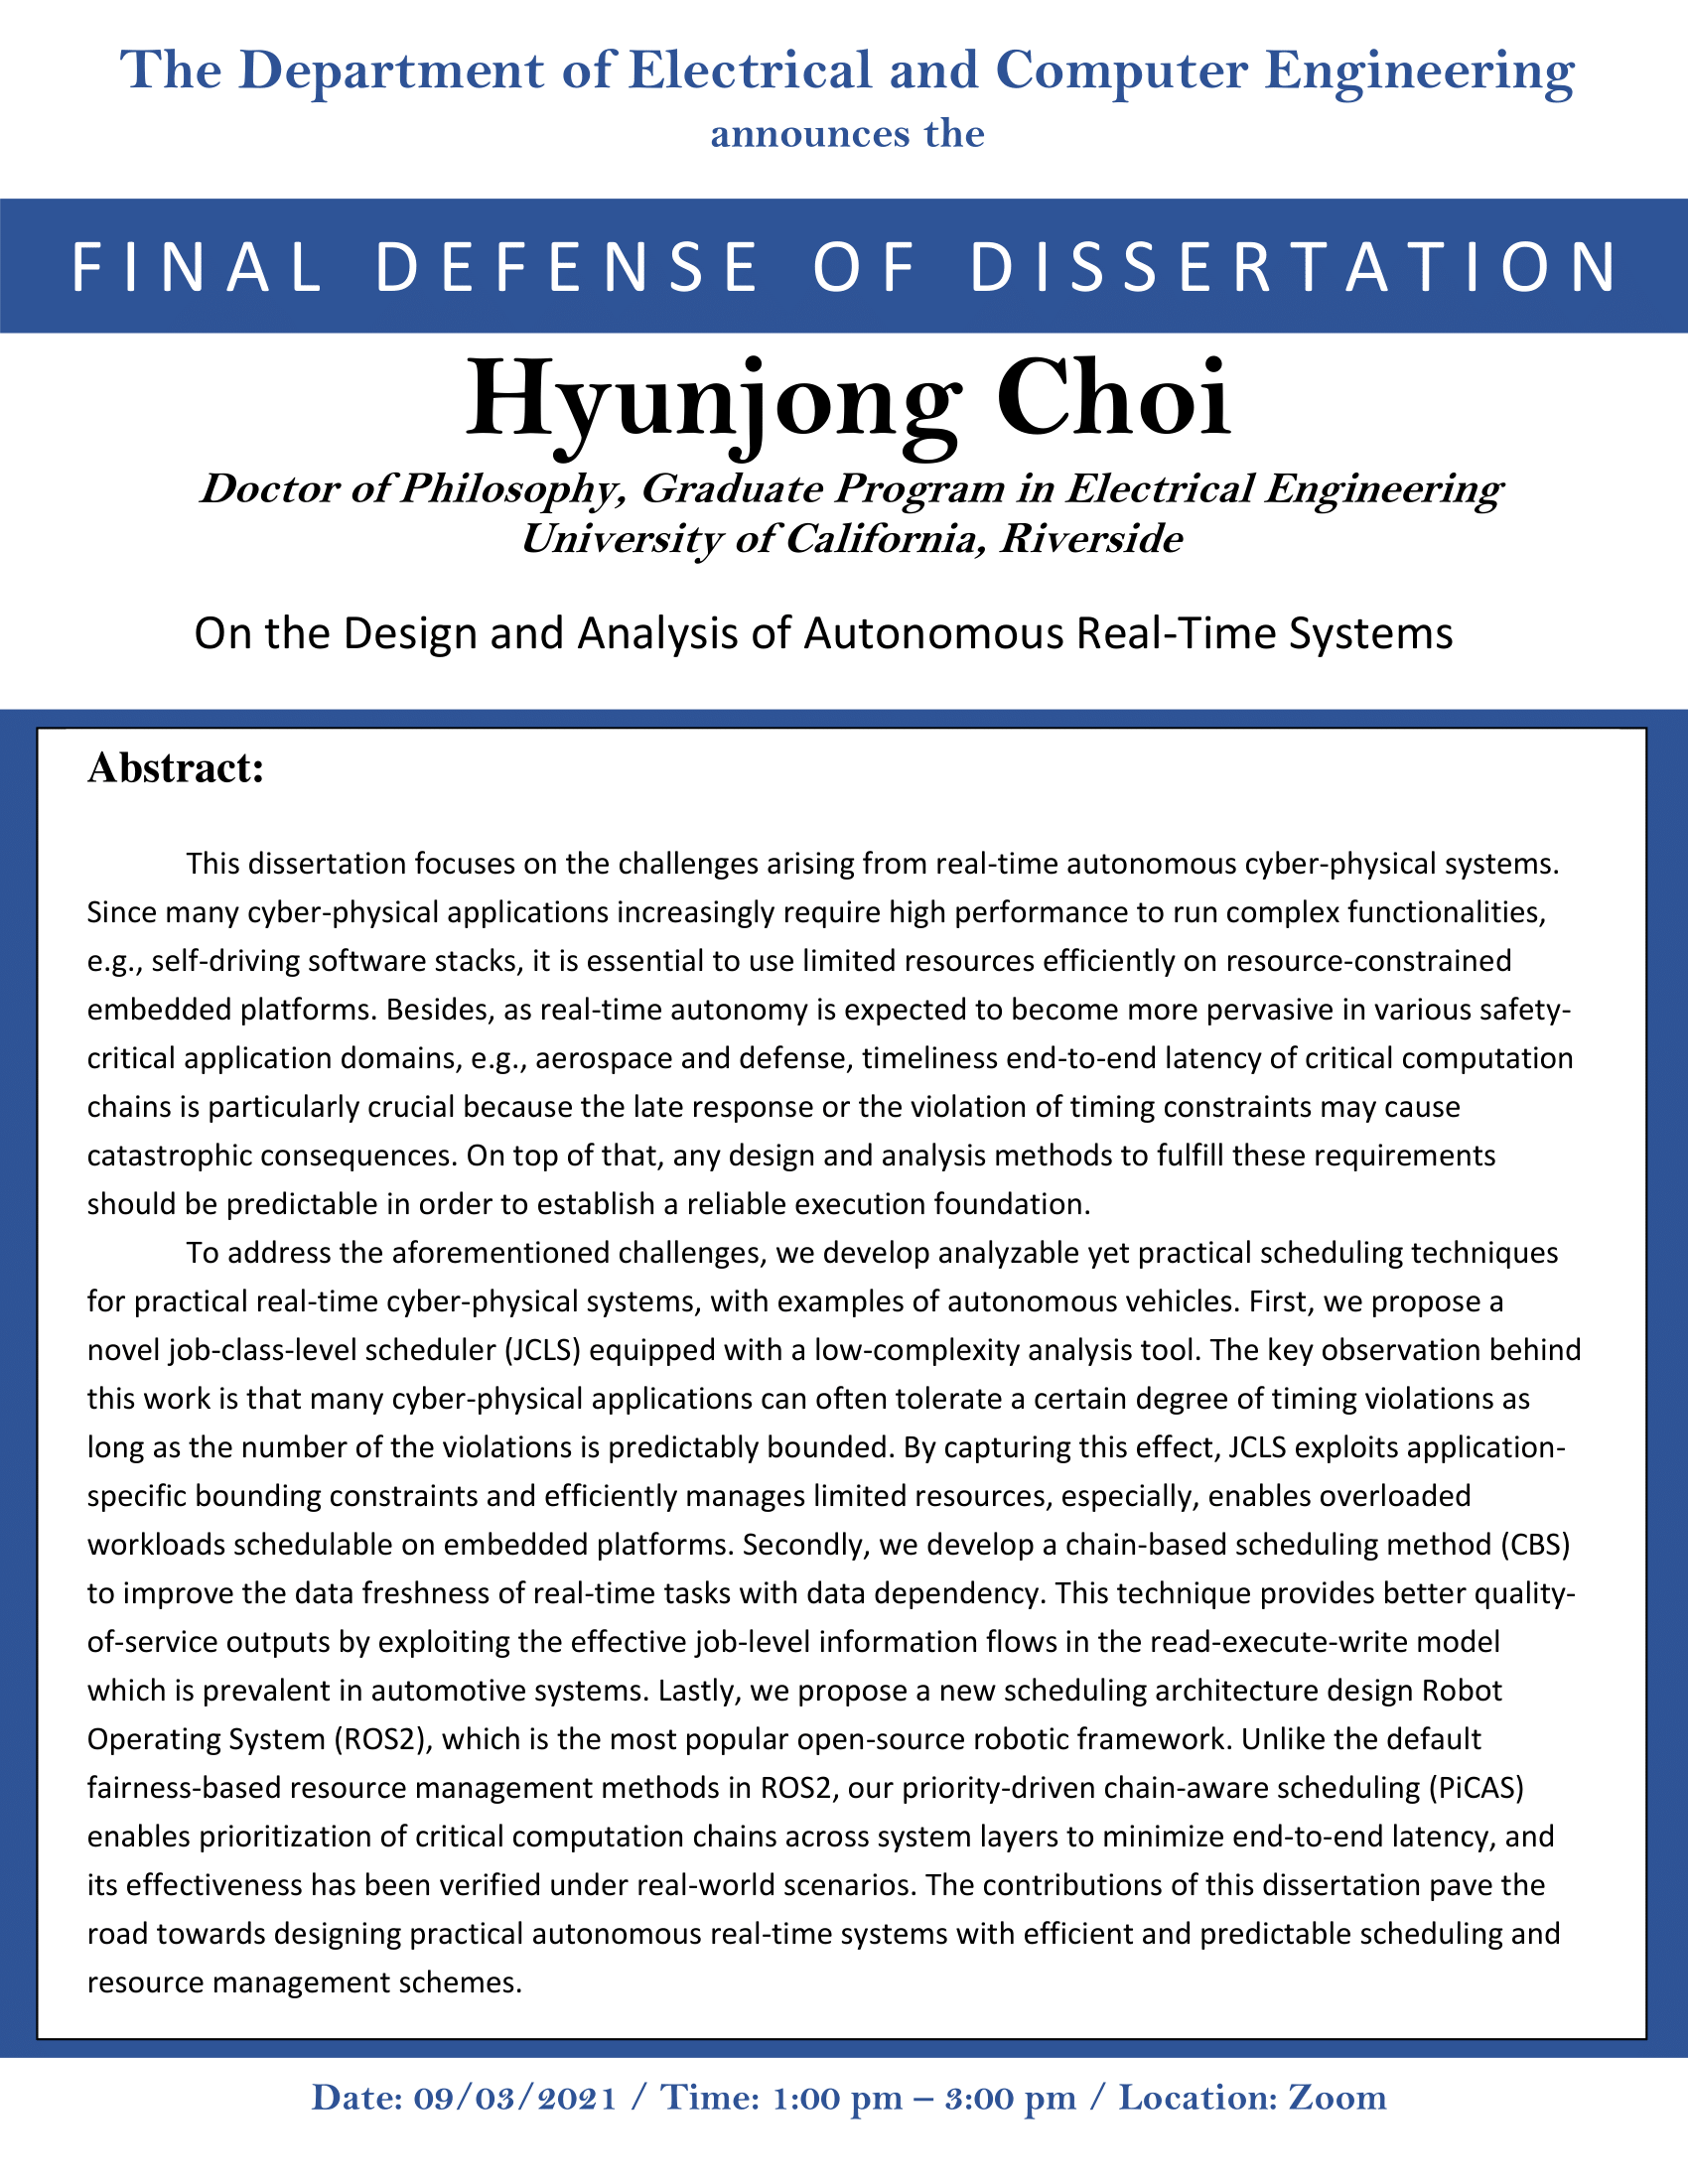 CHOI, Hyunjong PhD Dissertation Flyer-1_1